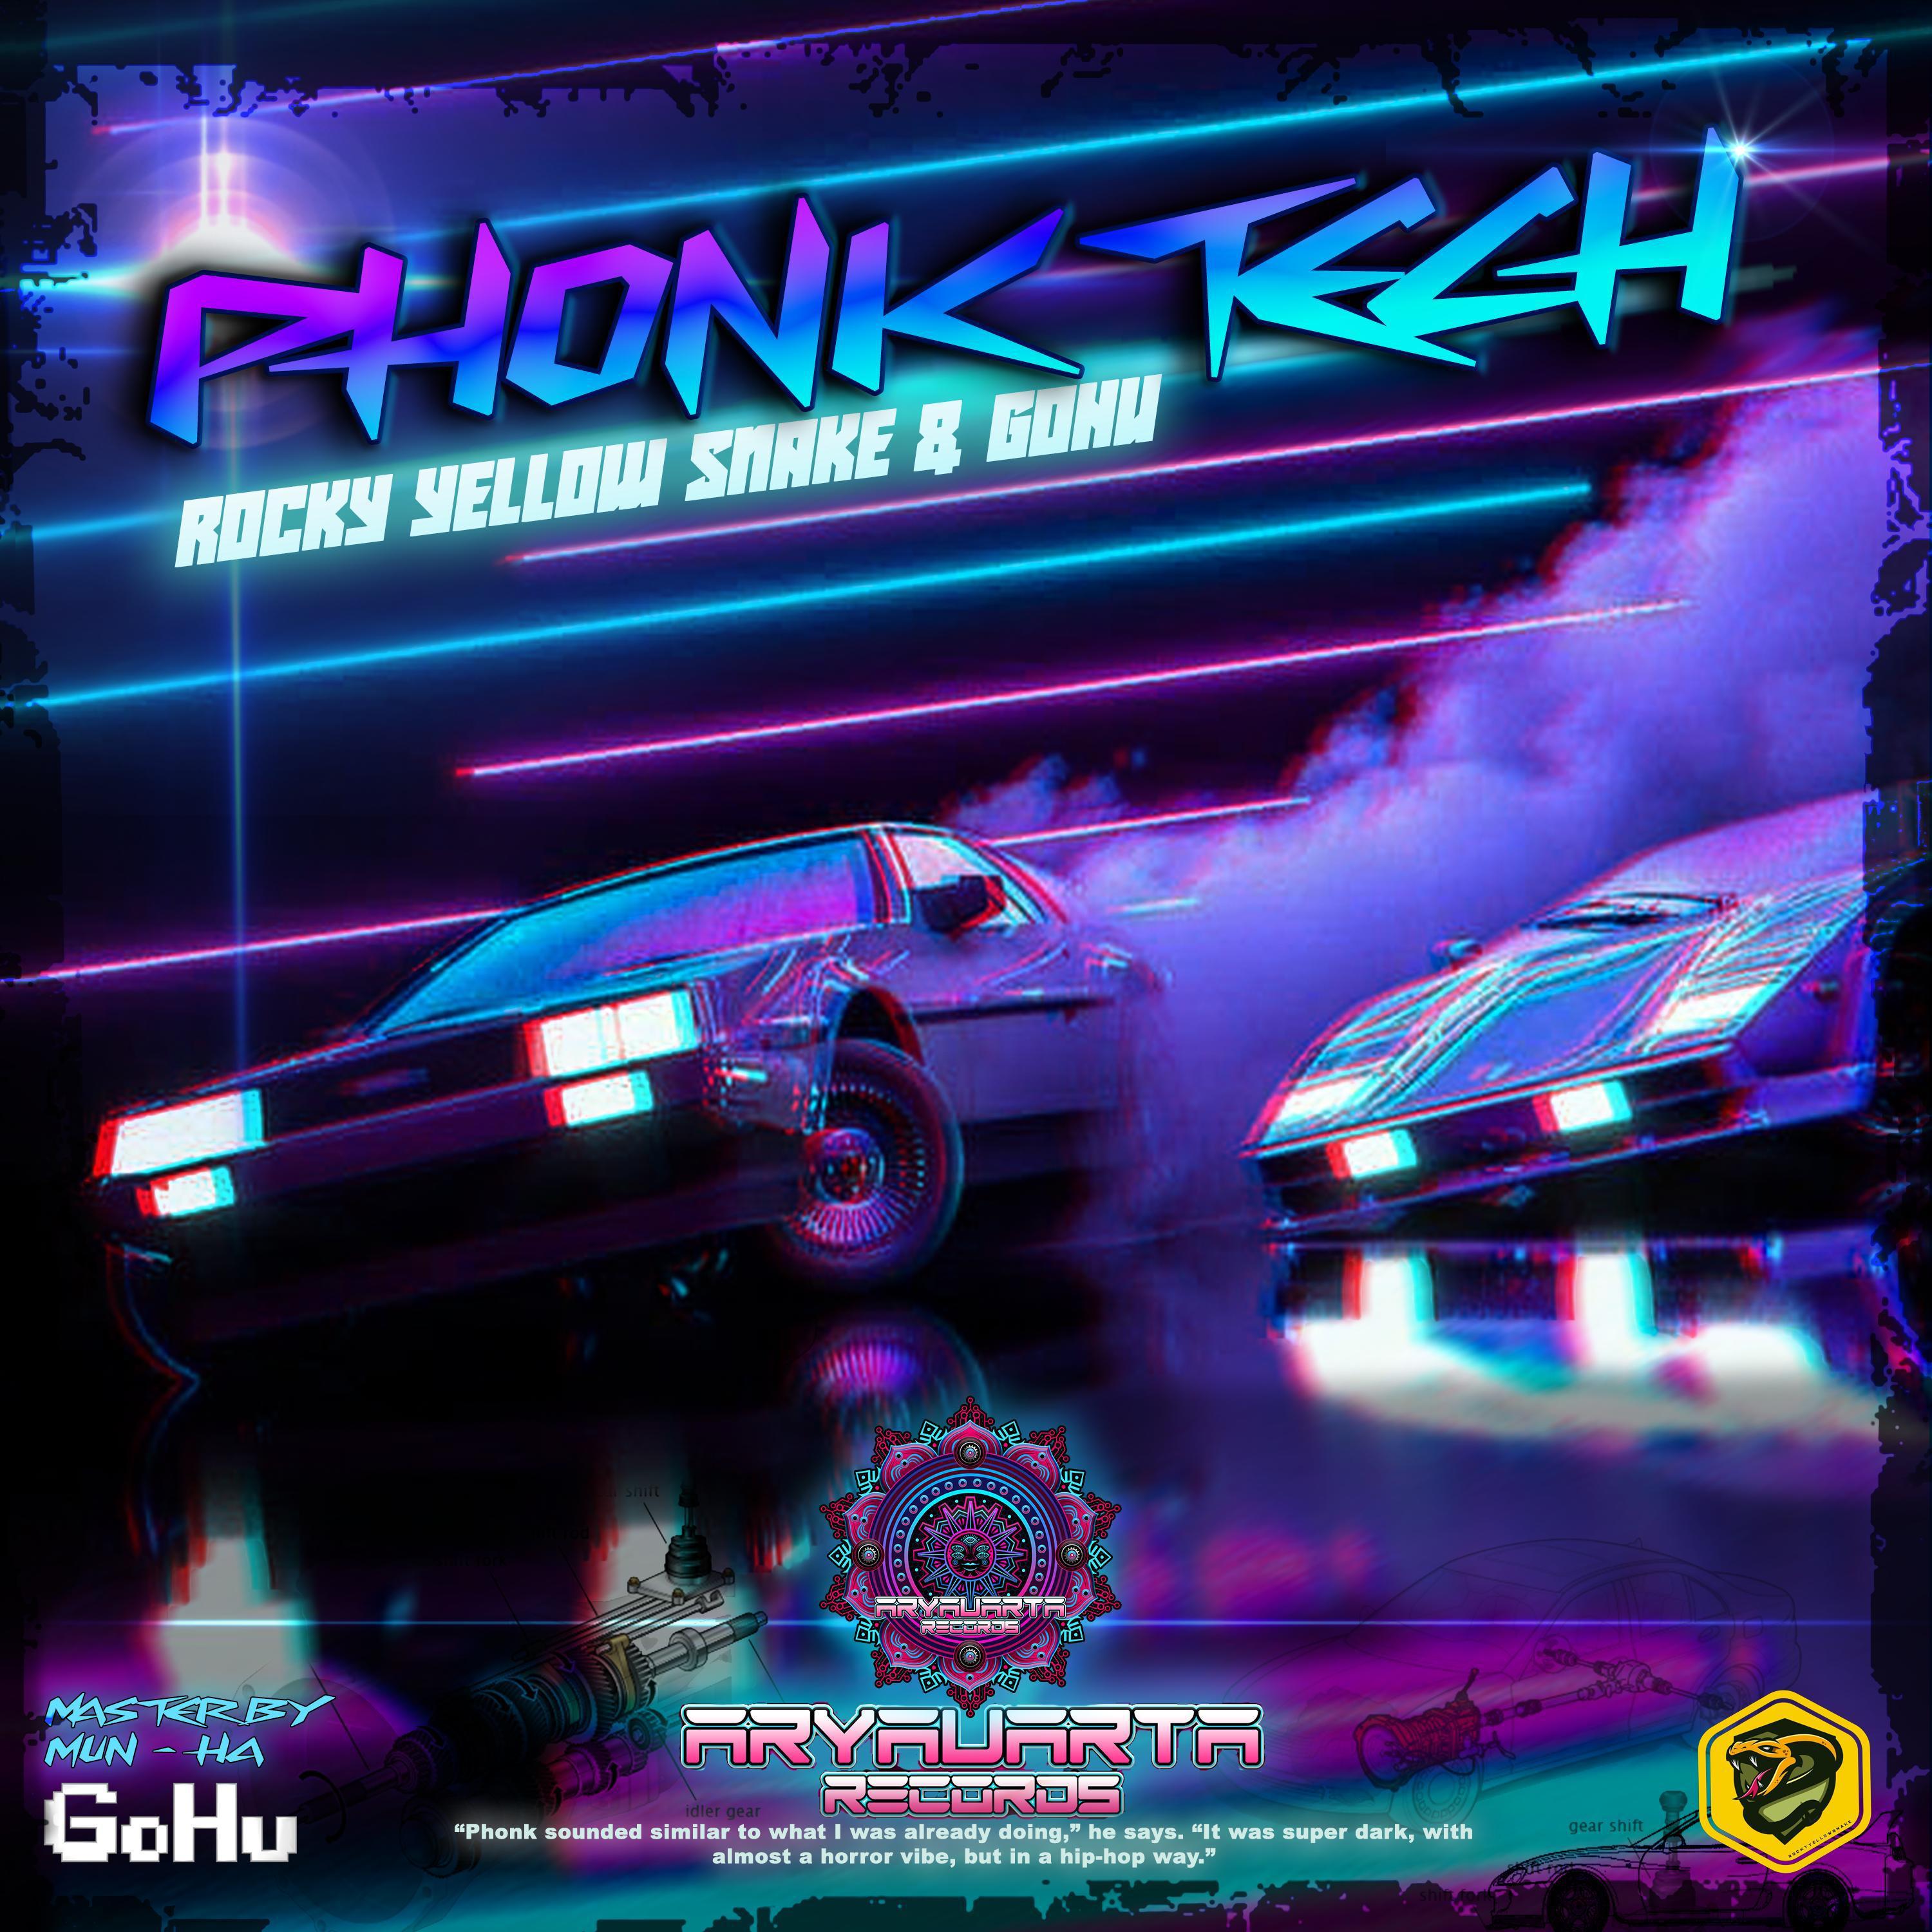 Rockyyellowsnake - Phonk Tech